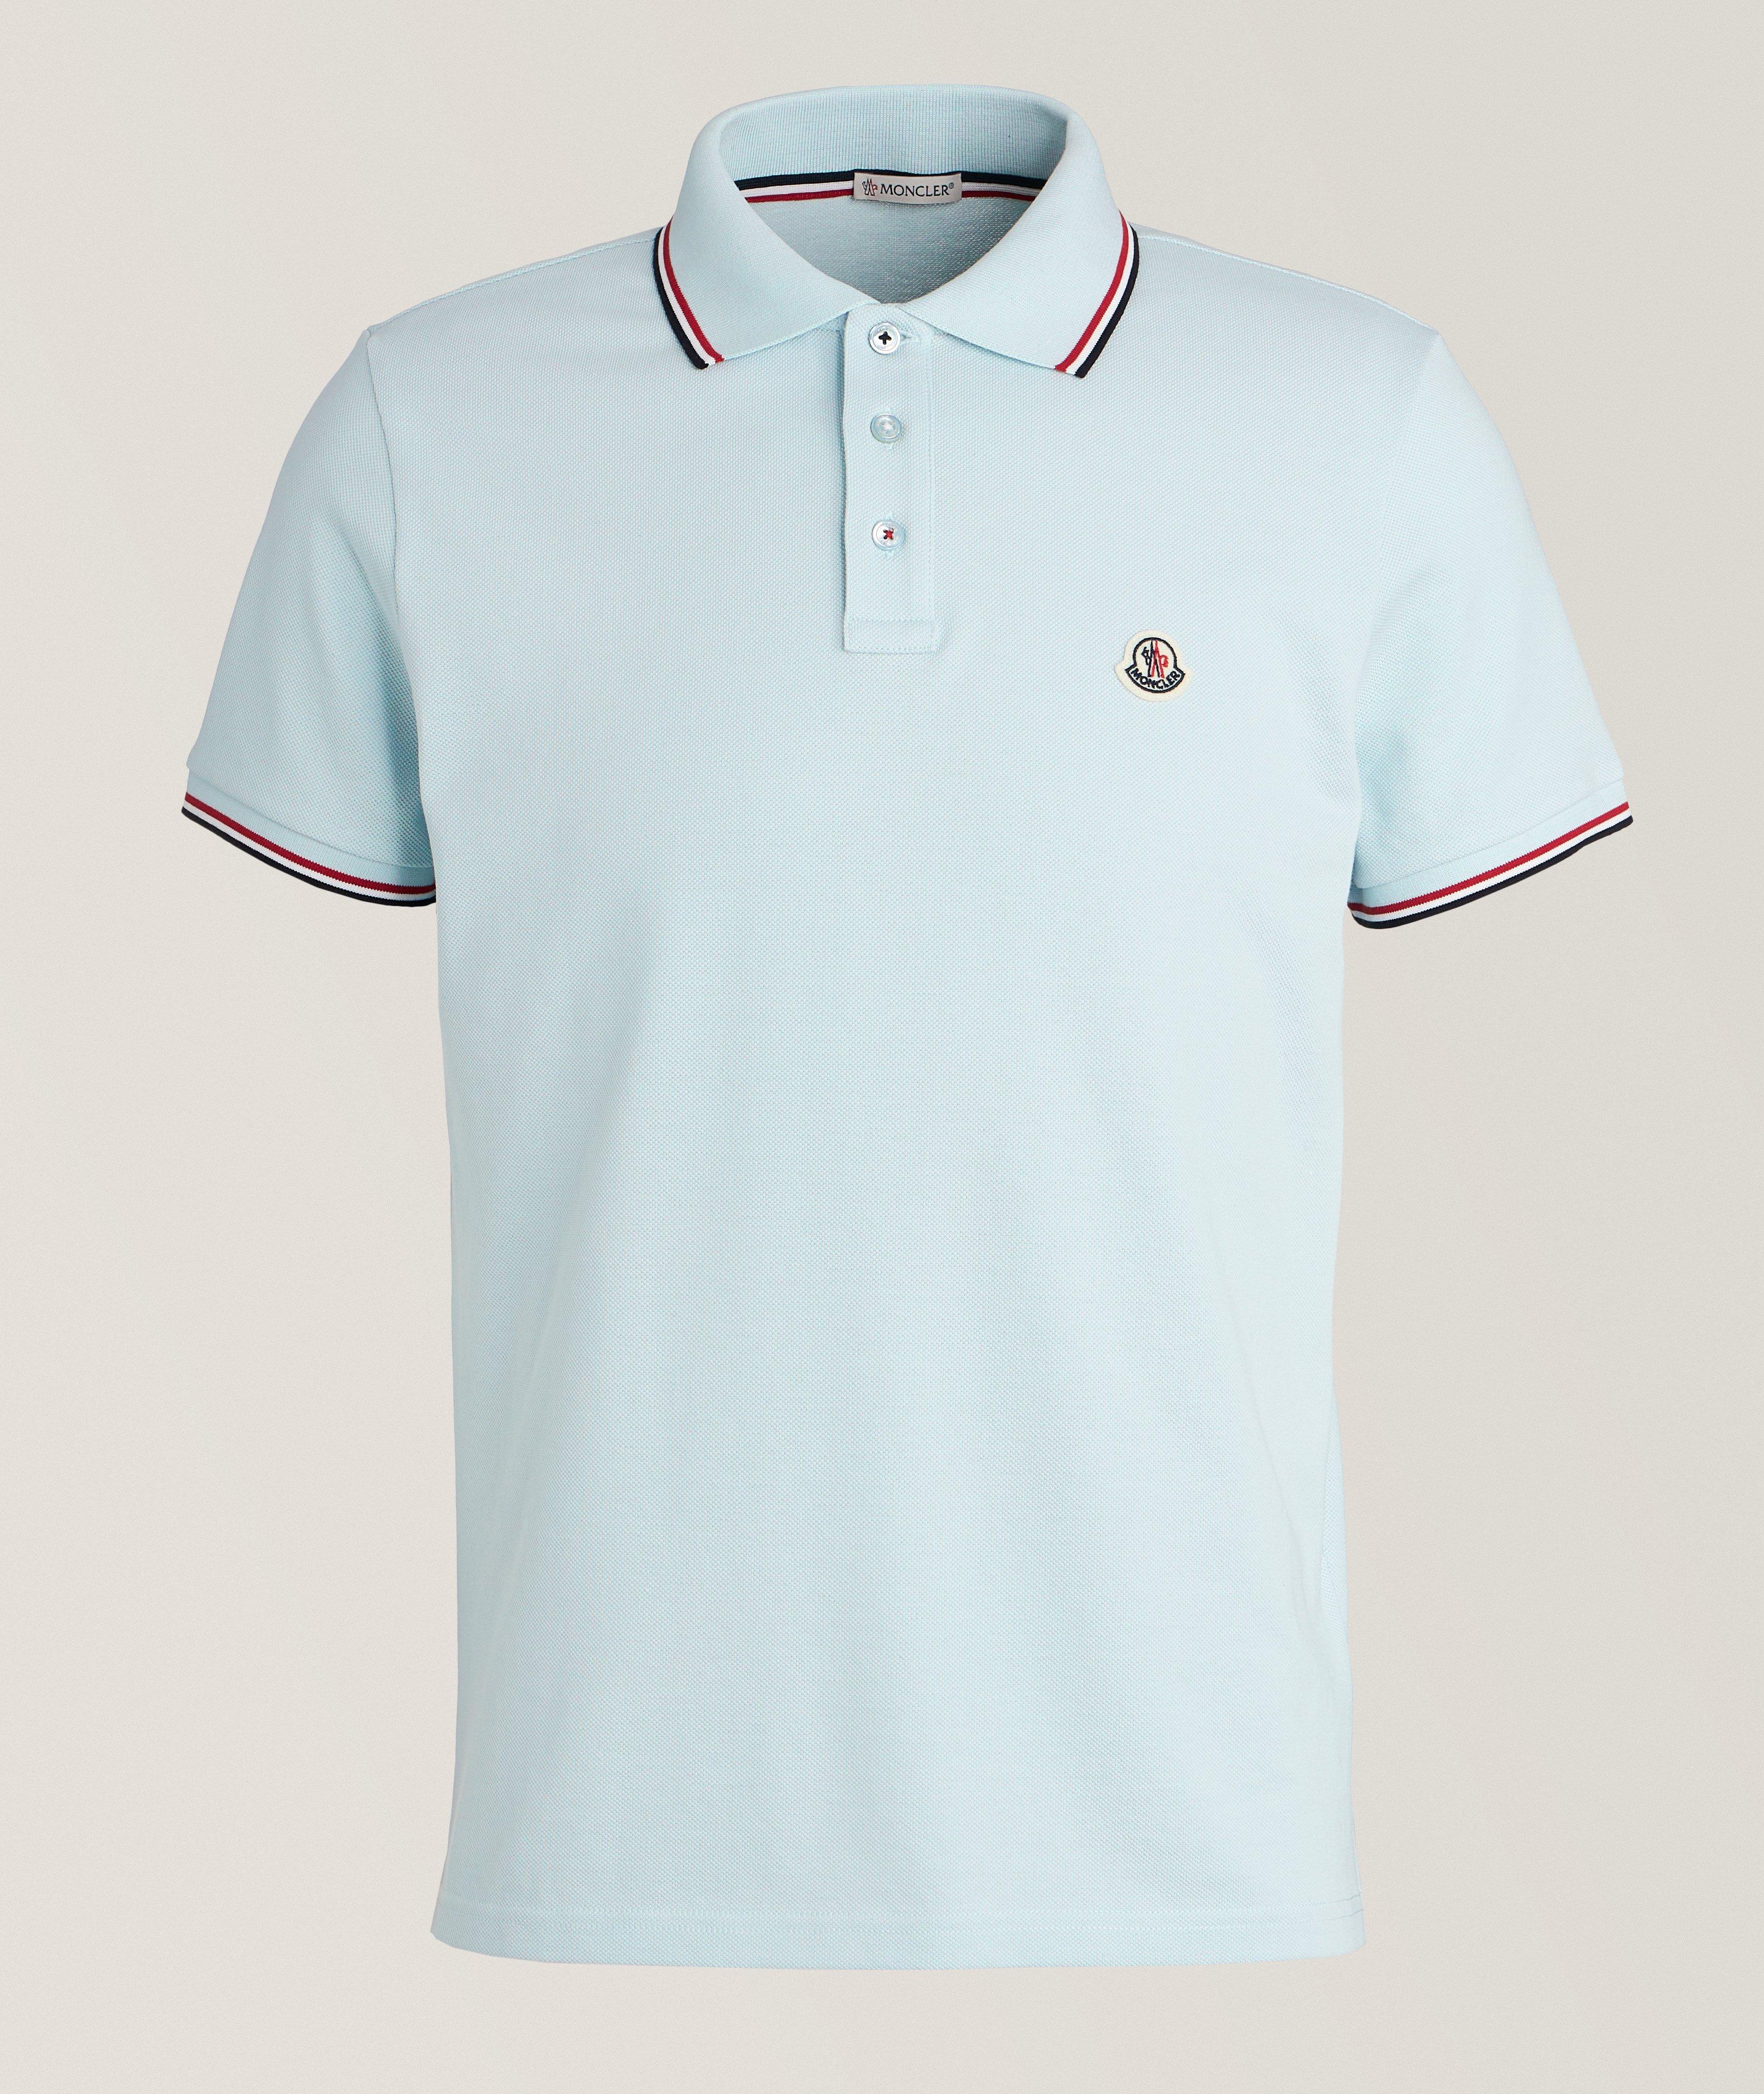 Tri-Colour Detailed Piqué Cotton Polo image 0